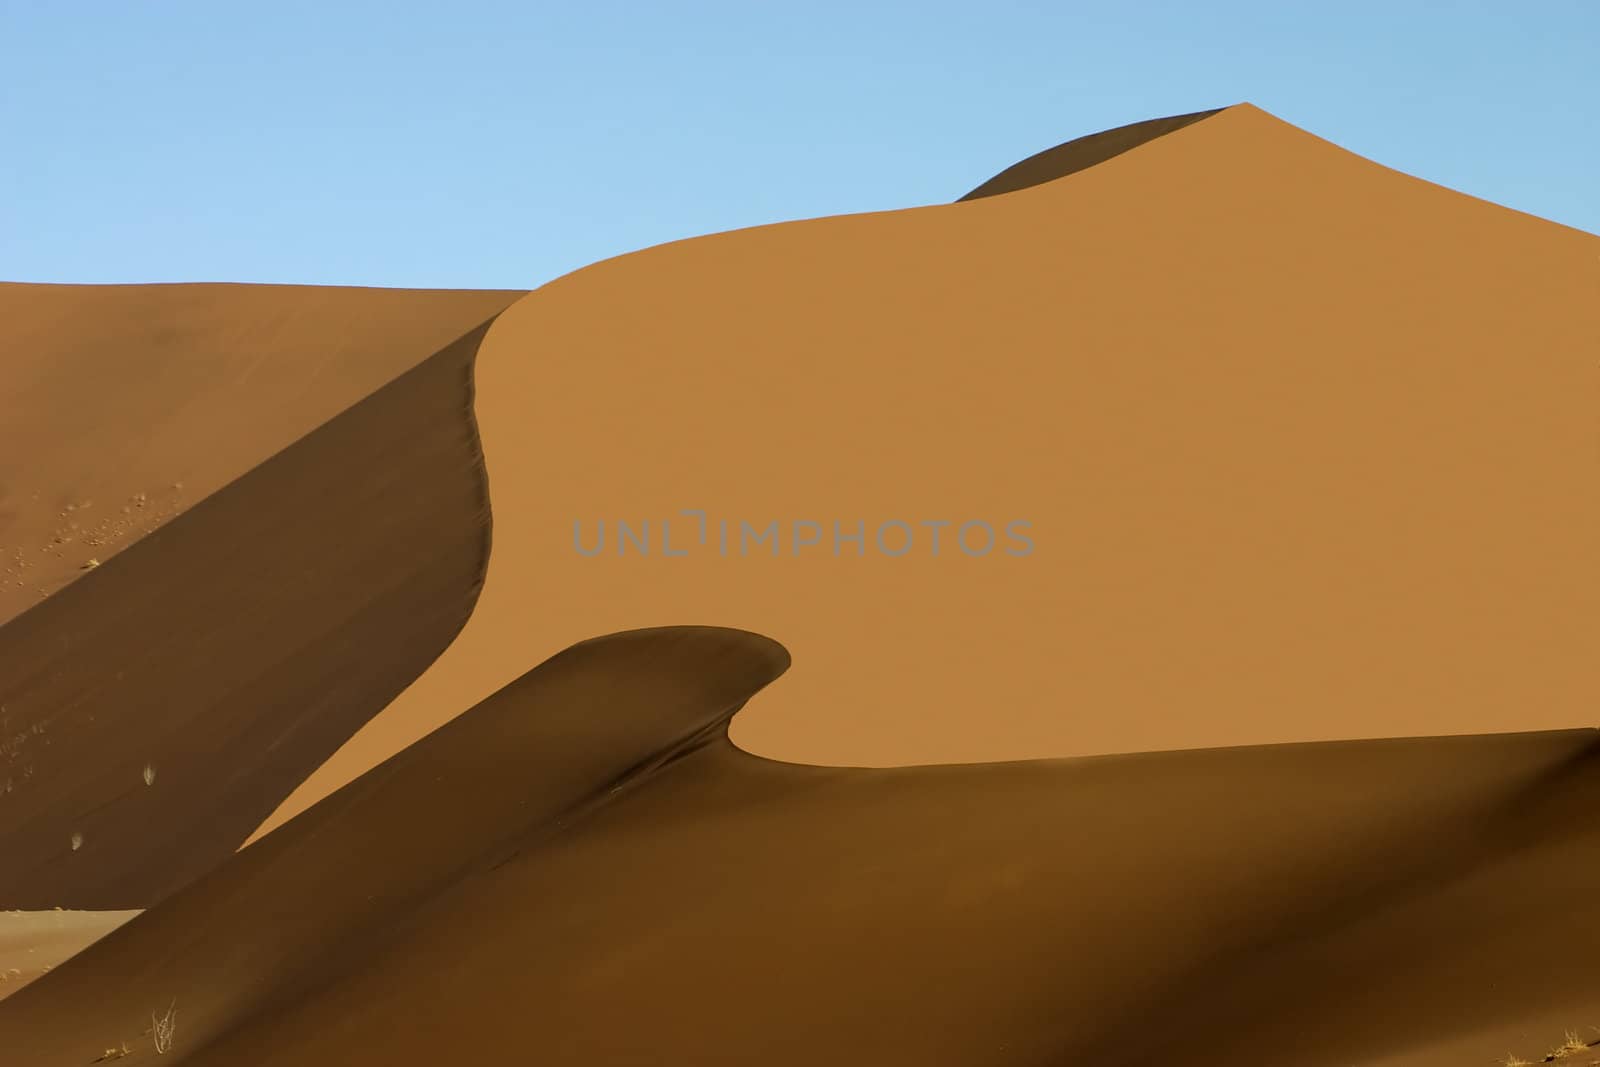 Orange sand dune with wave like shadow by darrenp